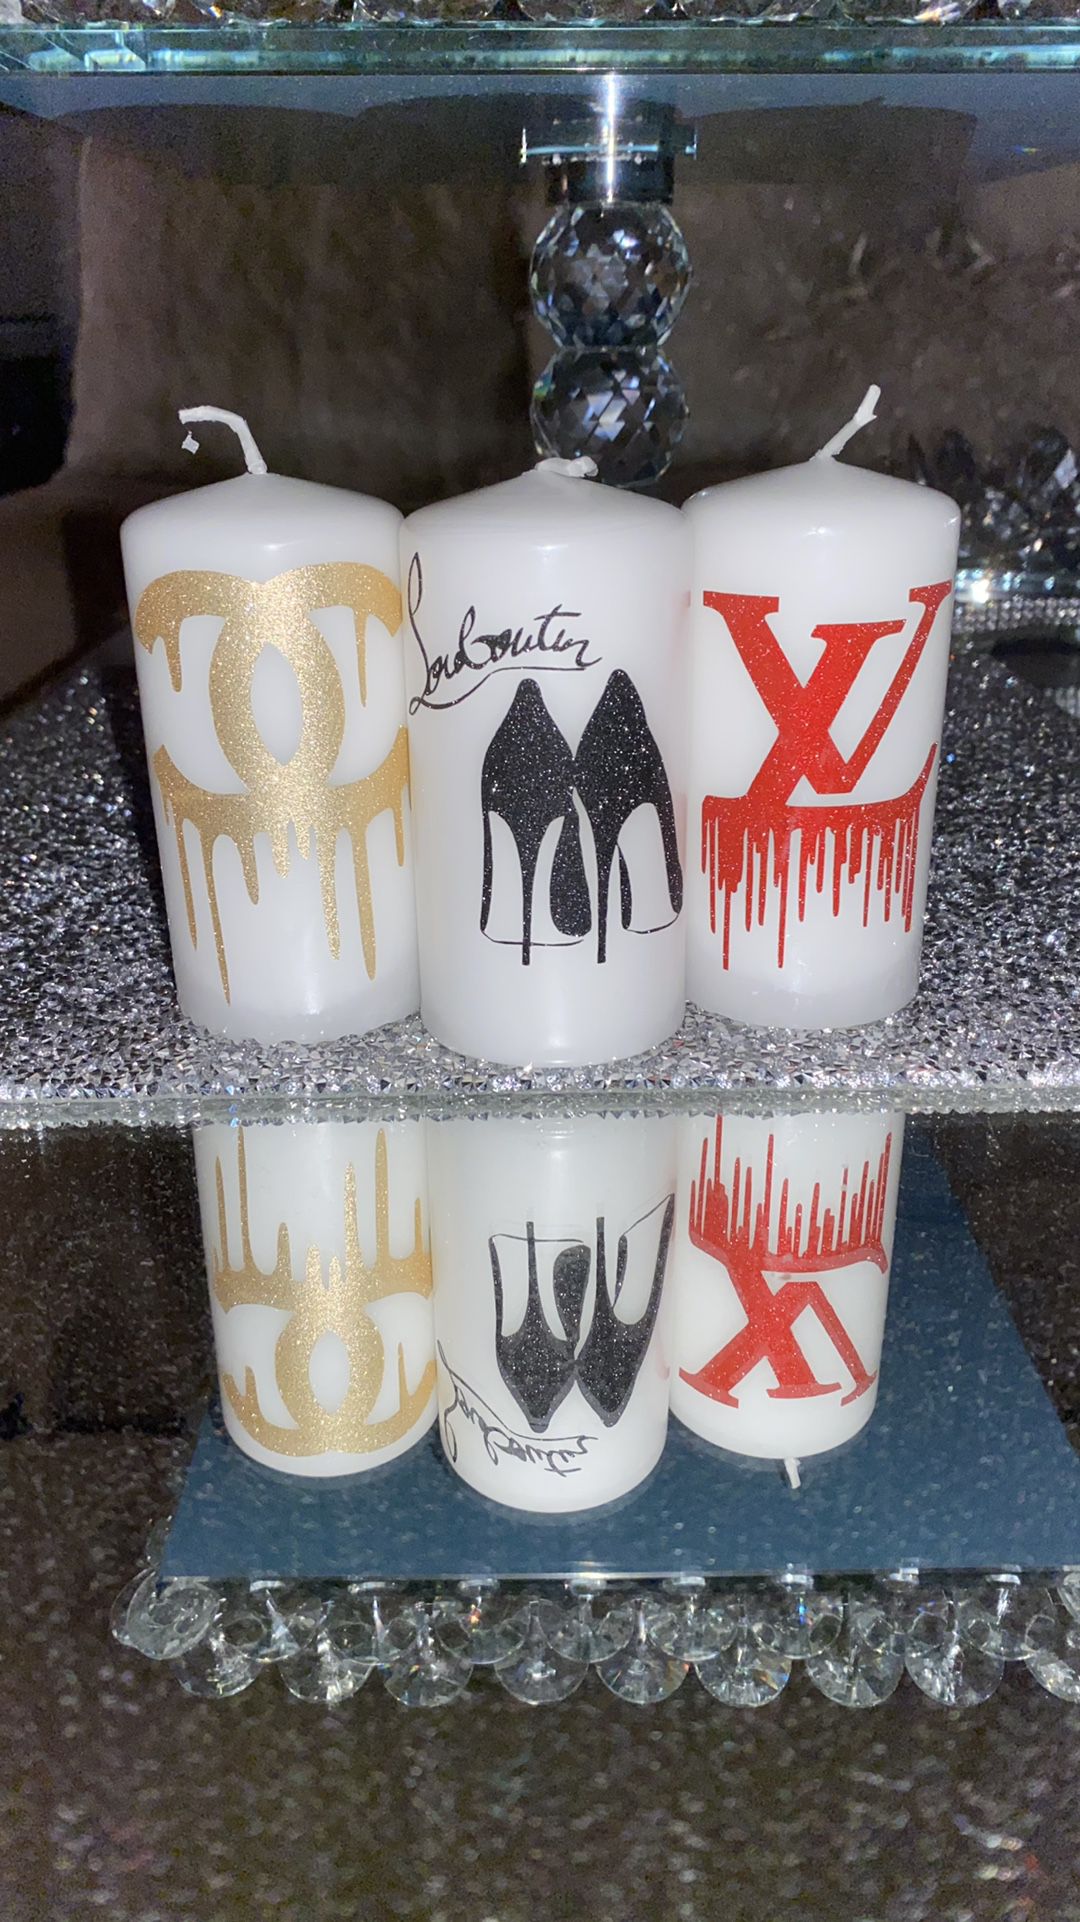 Custom Made Designer Candles Set Of 3